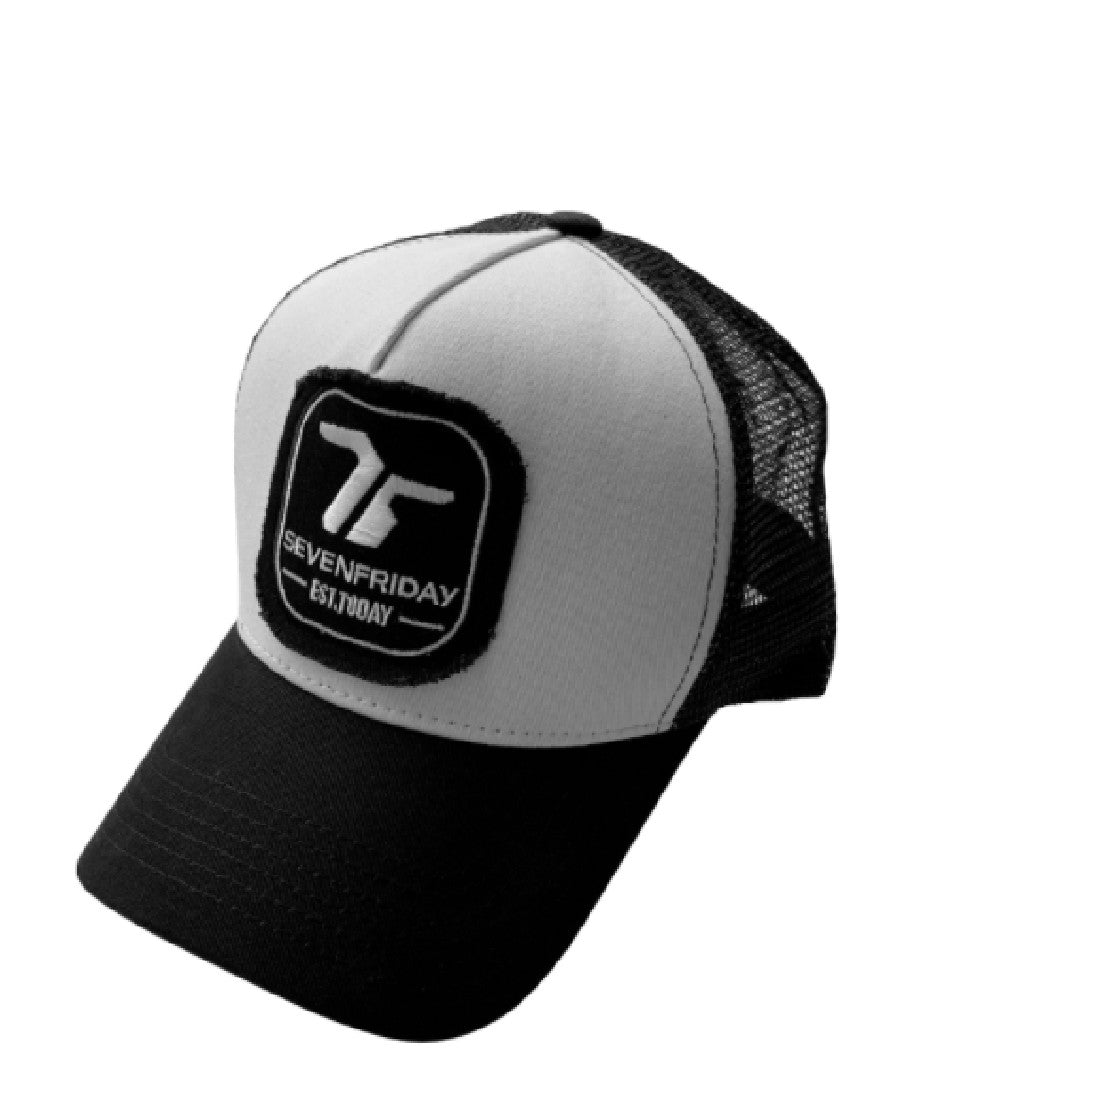 Sevenfriday Black Cap for Men and Women - SFCAP-0002